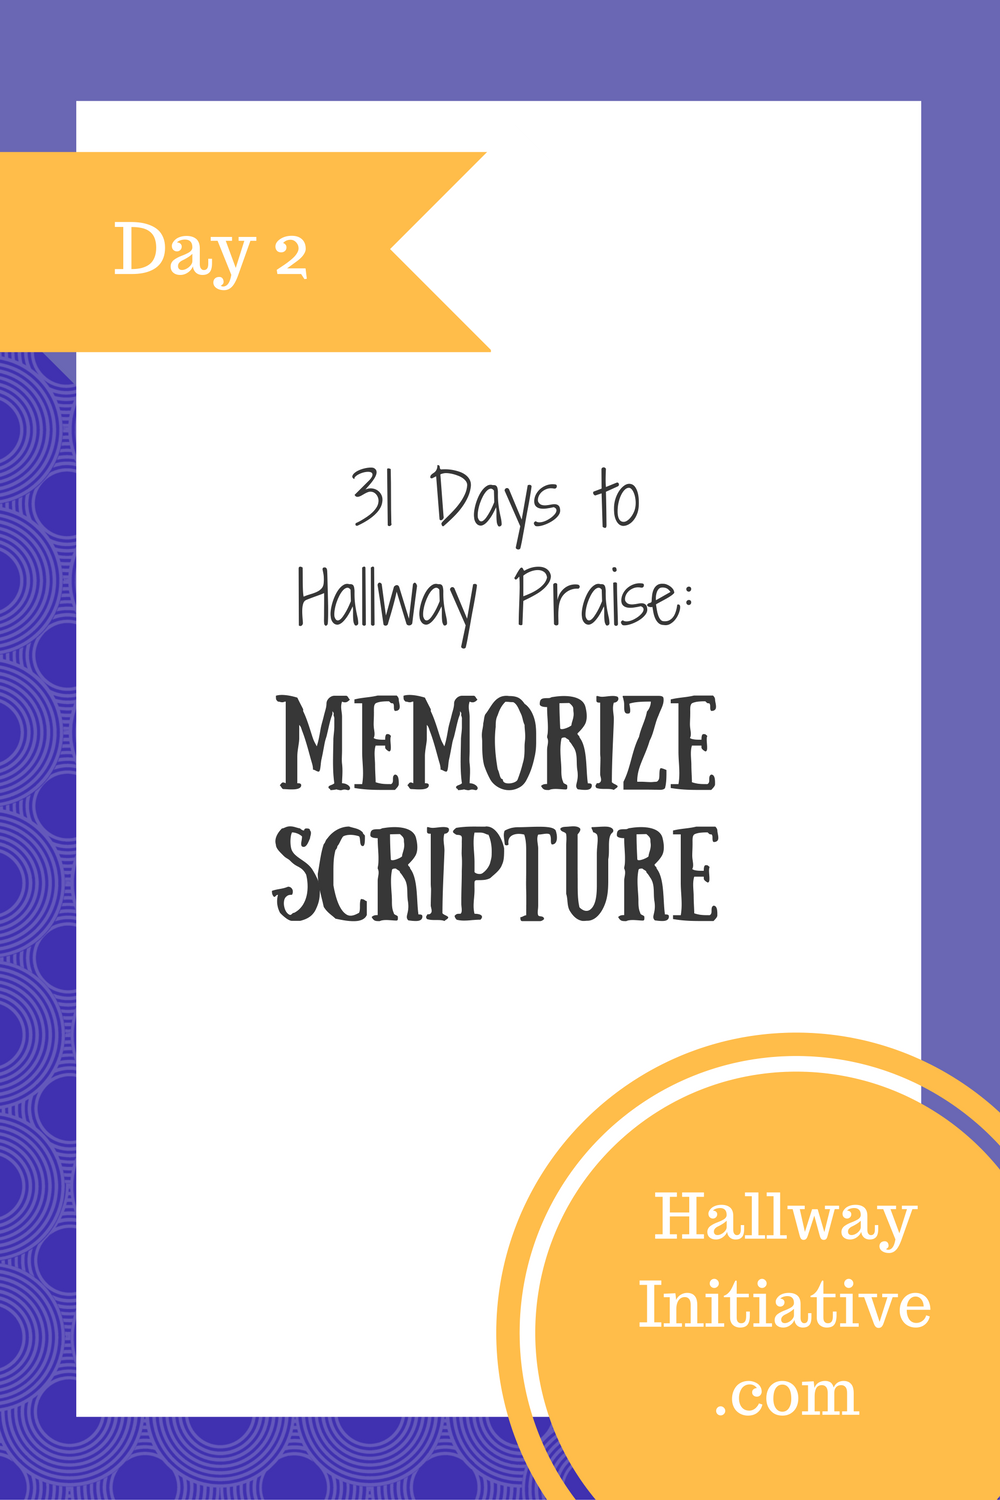 Day 2: memorize scripture